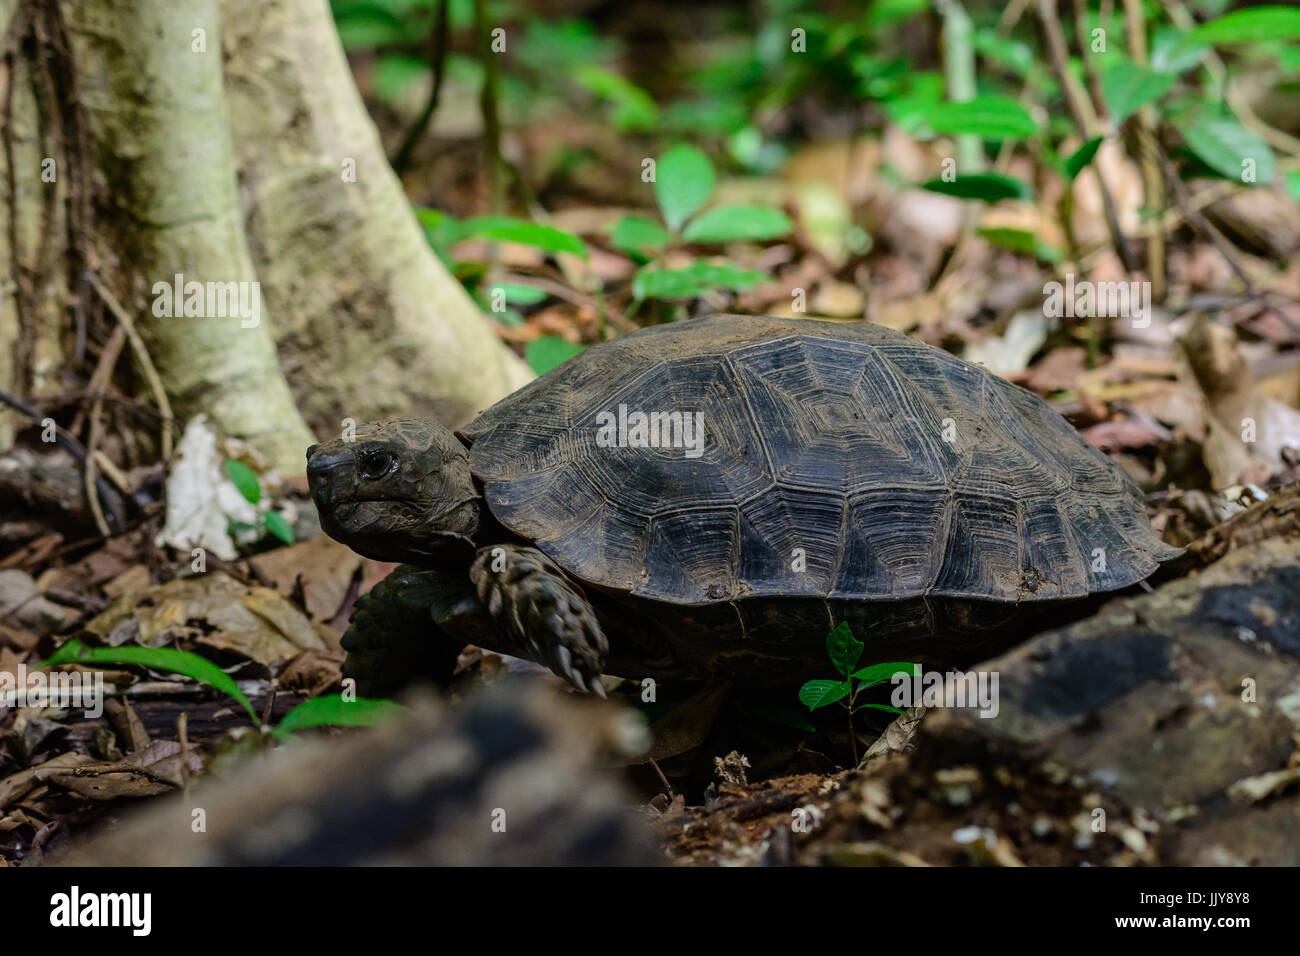 Manouria emys phayei or Asian Giant Tortoise in forest at Kaeng Krachan National Park, Thailand. Stock Photo